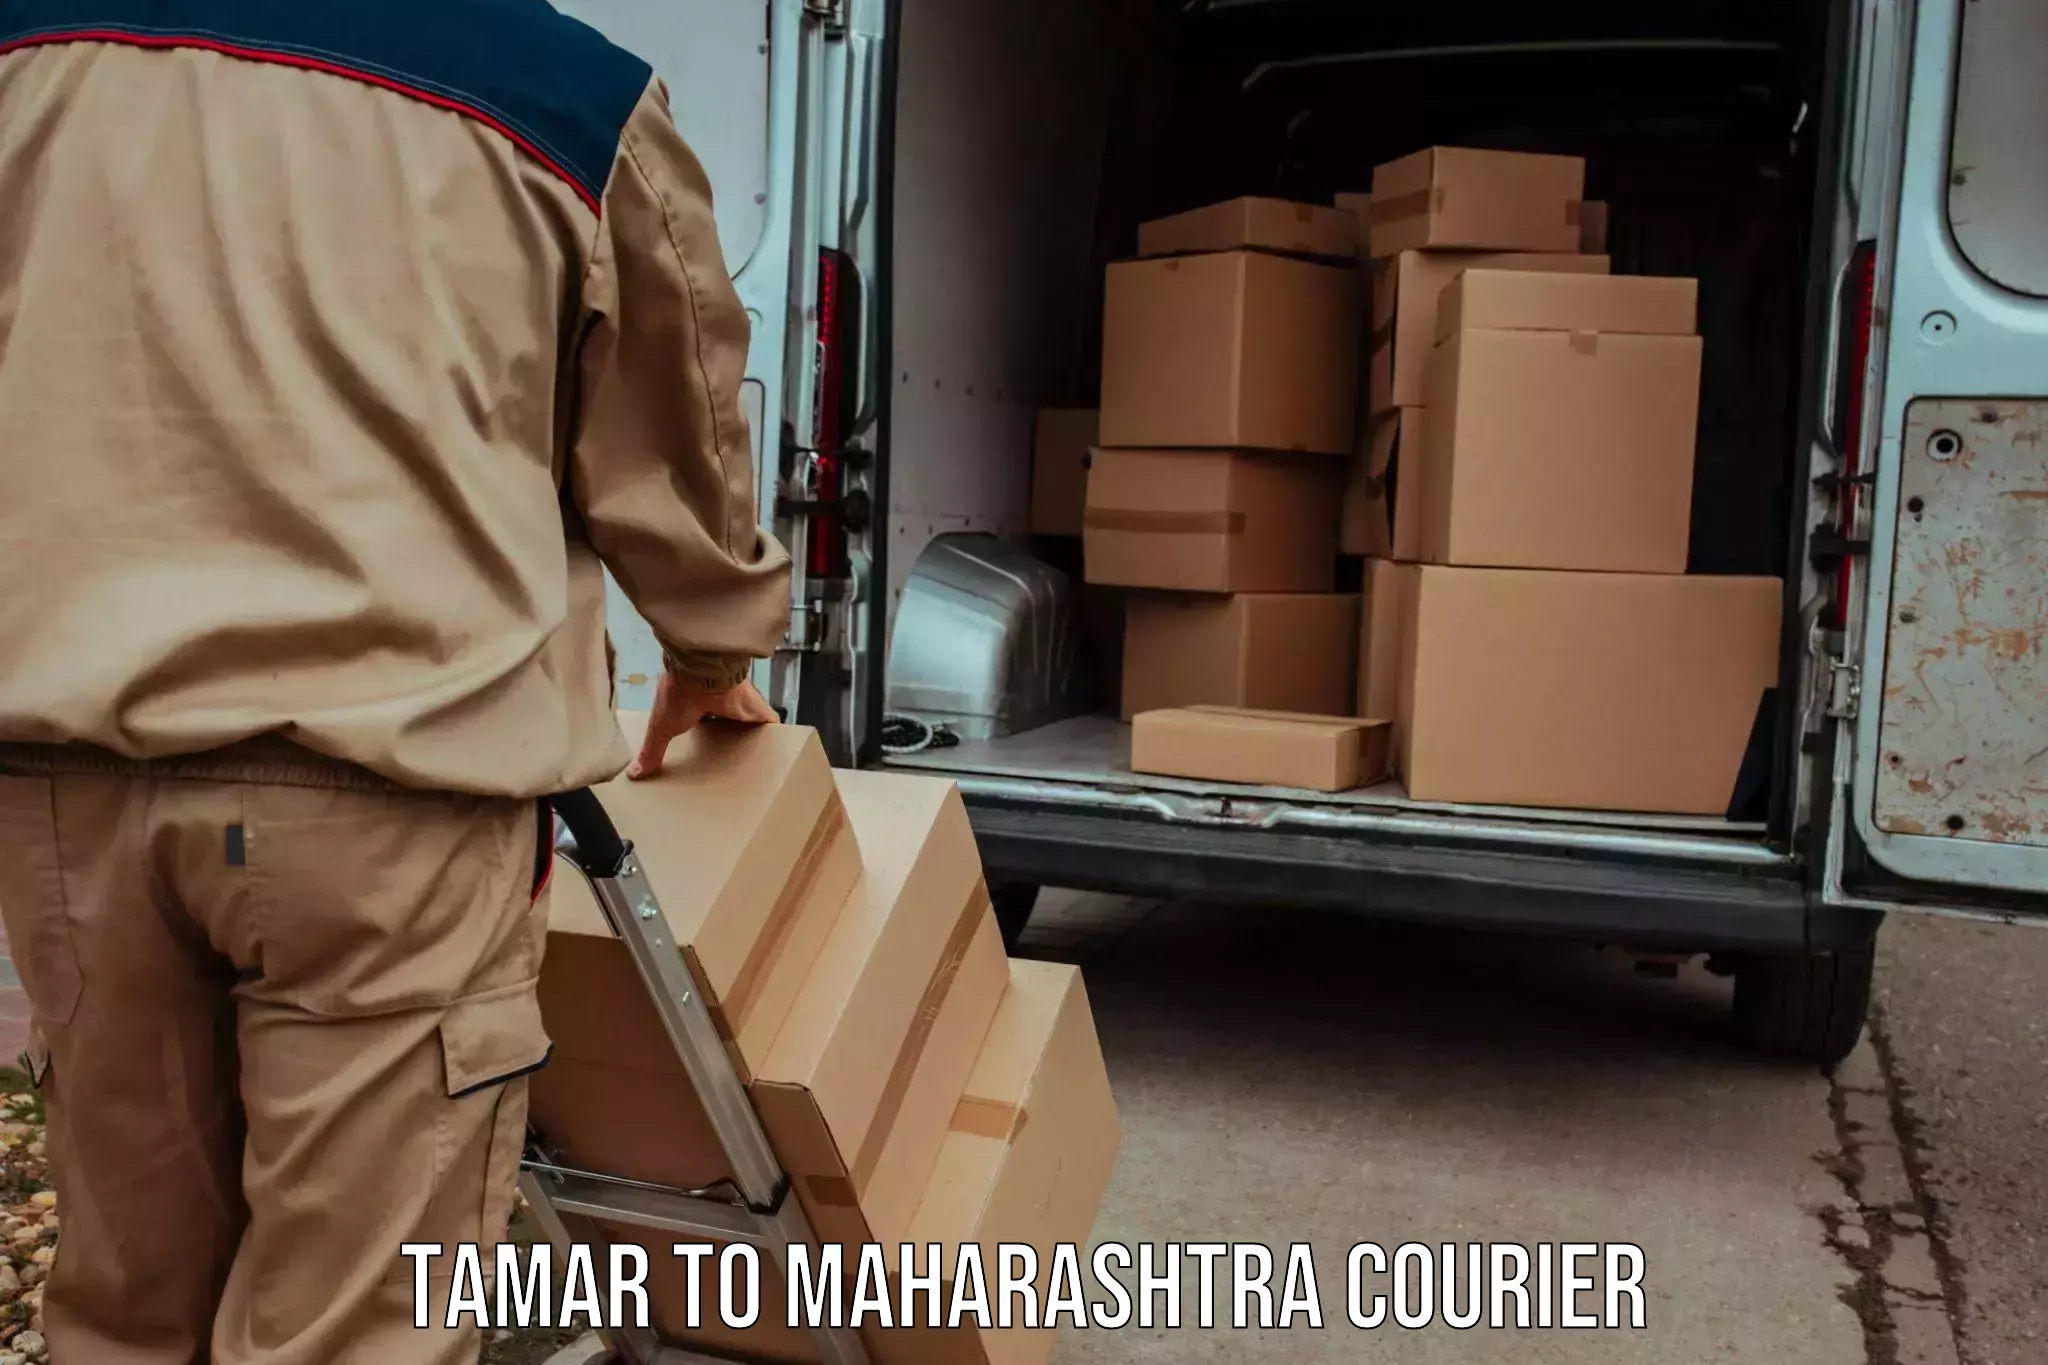 International parcel service Tamar to Mahabaleshwar